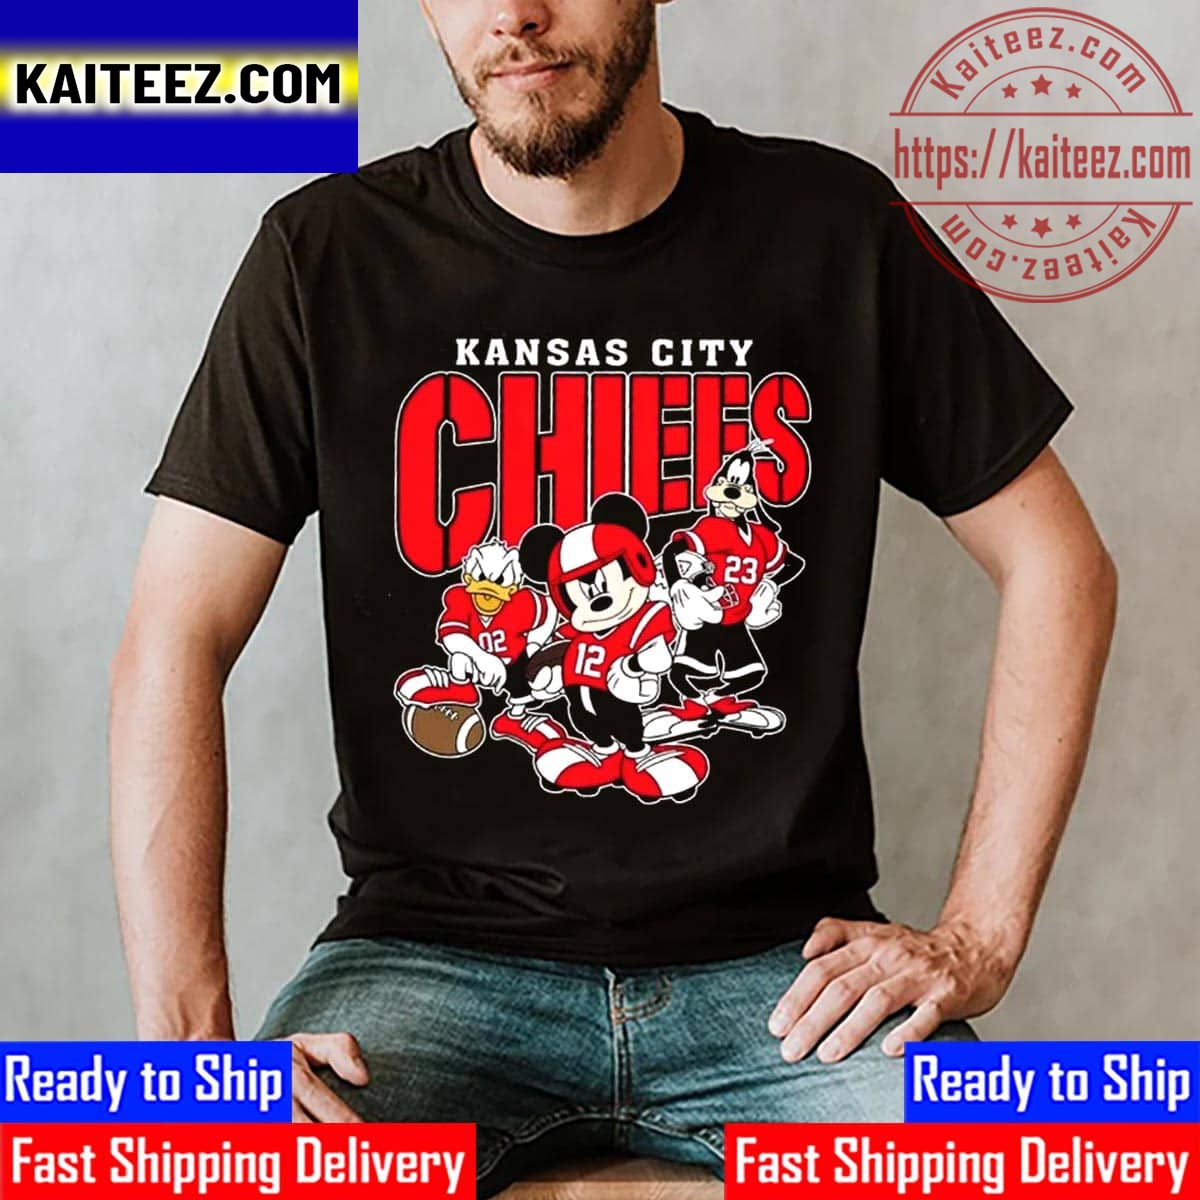 Super Bowl LVII 2023 Champion Kansas City Chiefs Team T-shirt